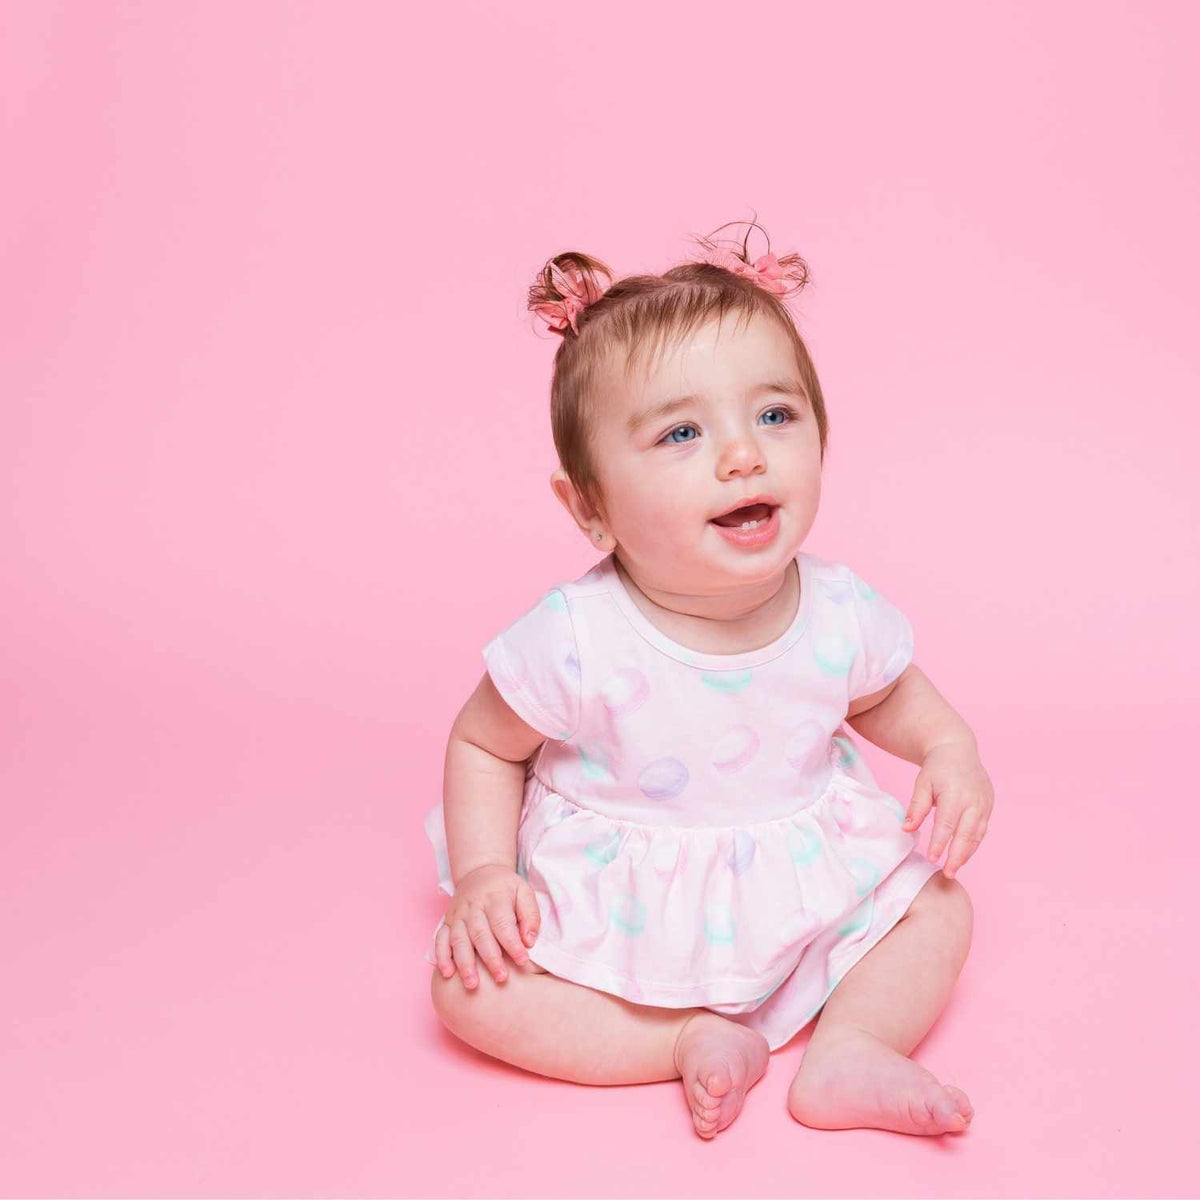 Norani Baby Pink Macaron Dress With Bloomers